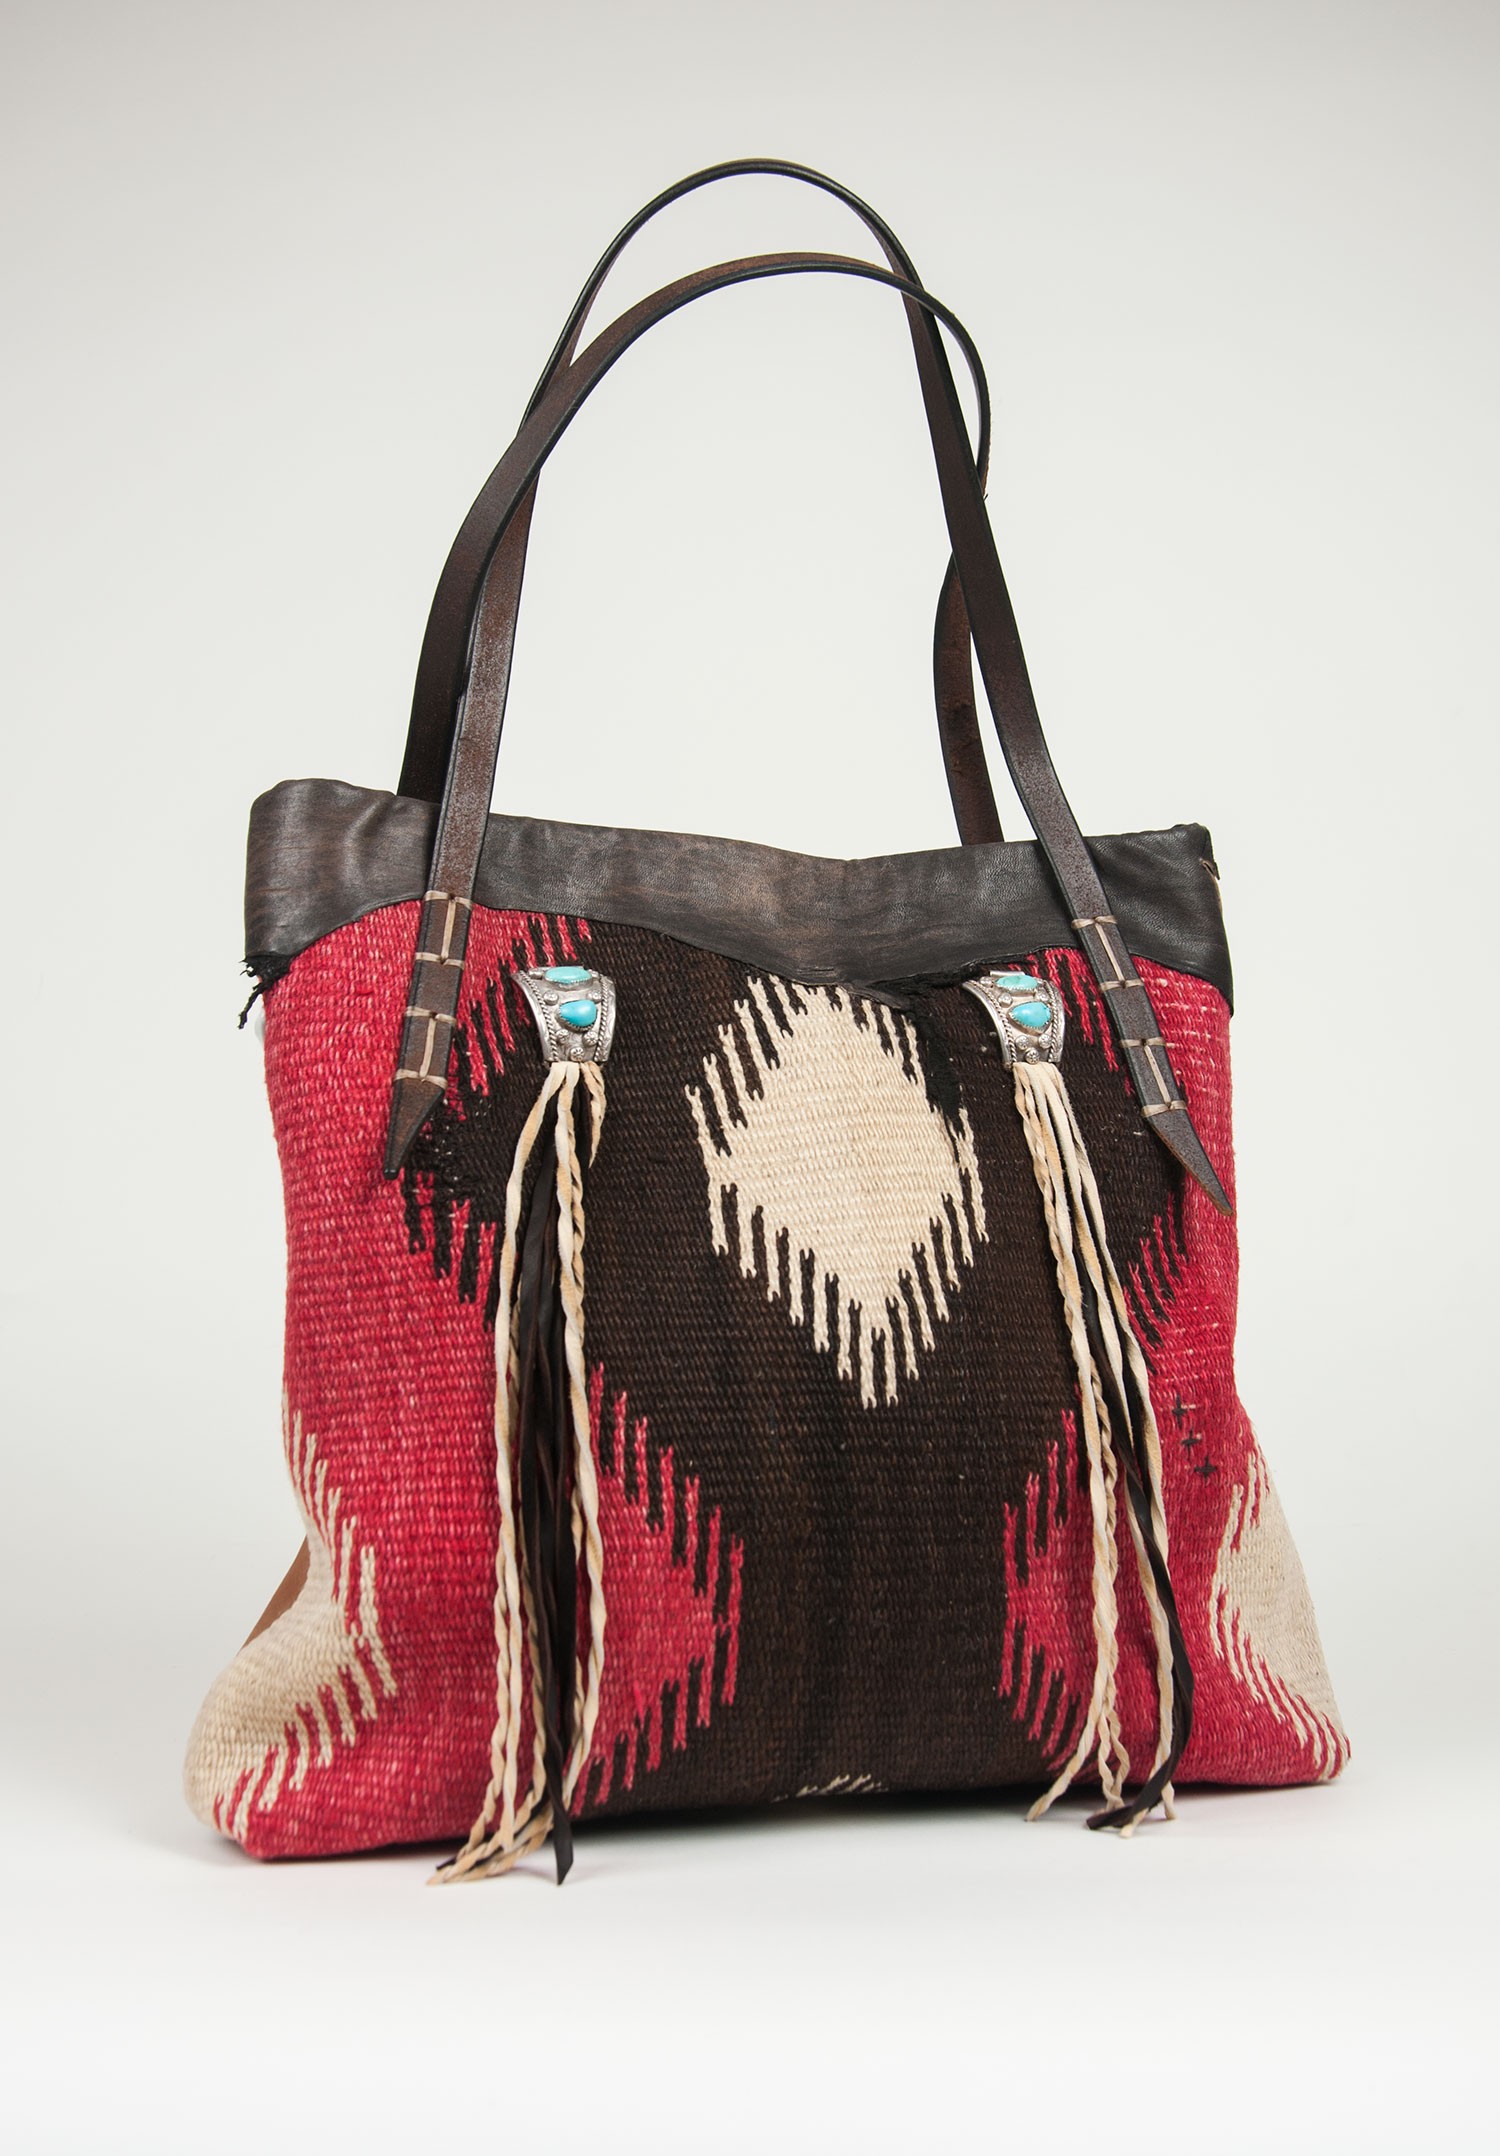 Santa Fe Scout Tawney Bag in Red and Brown | Santa Fe Dry Goods Trippen ...